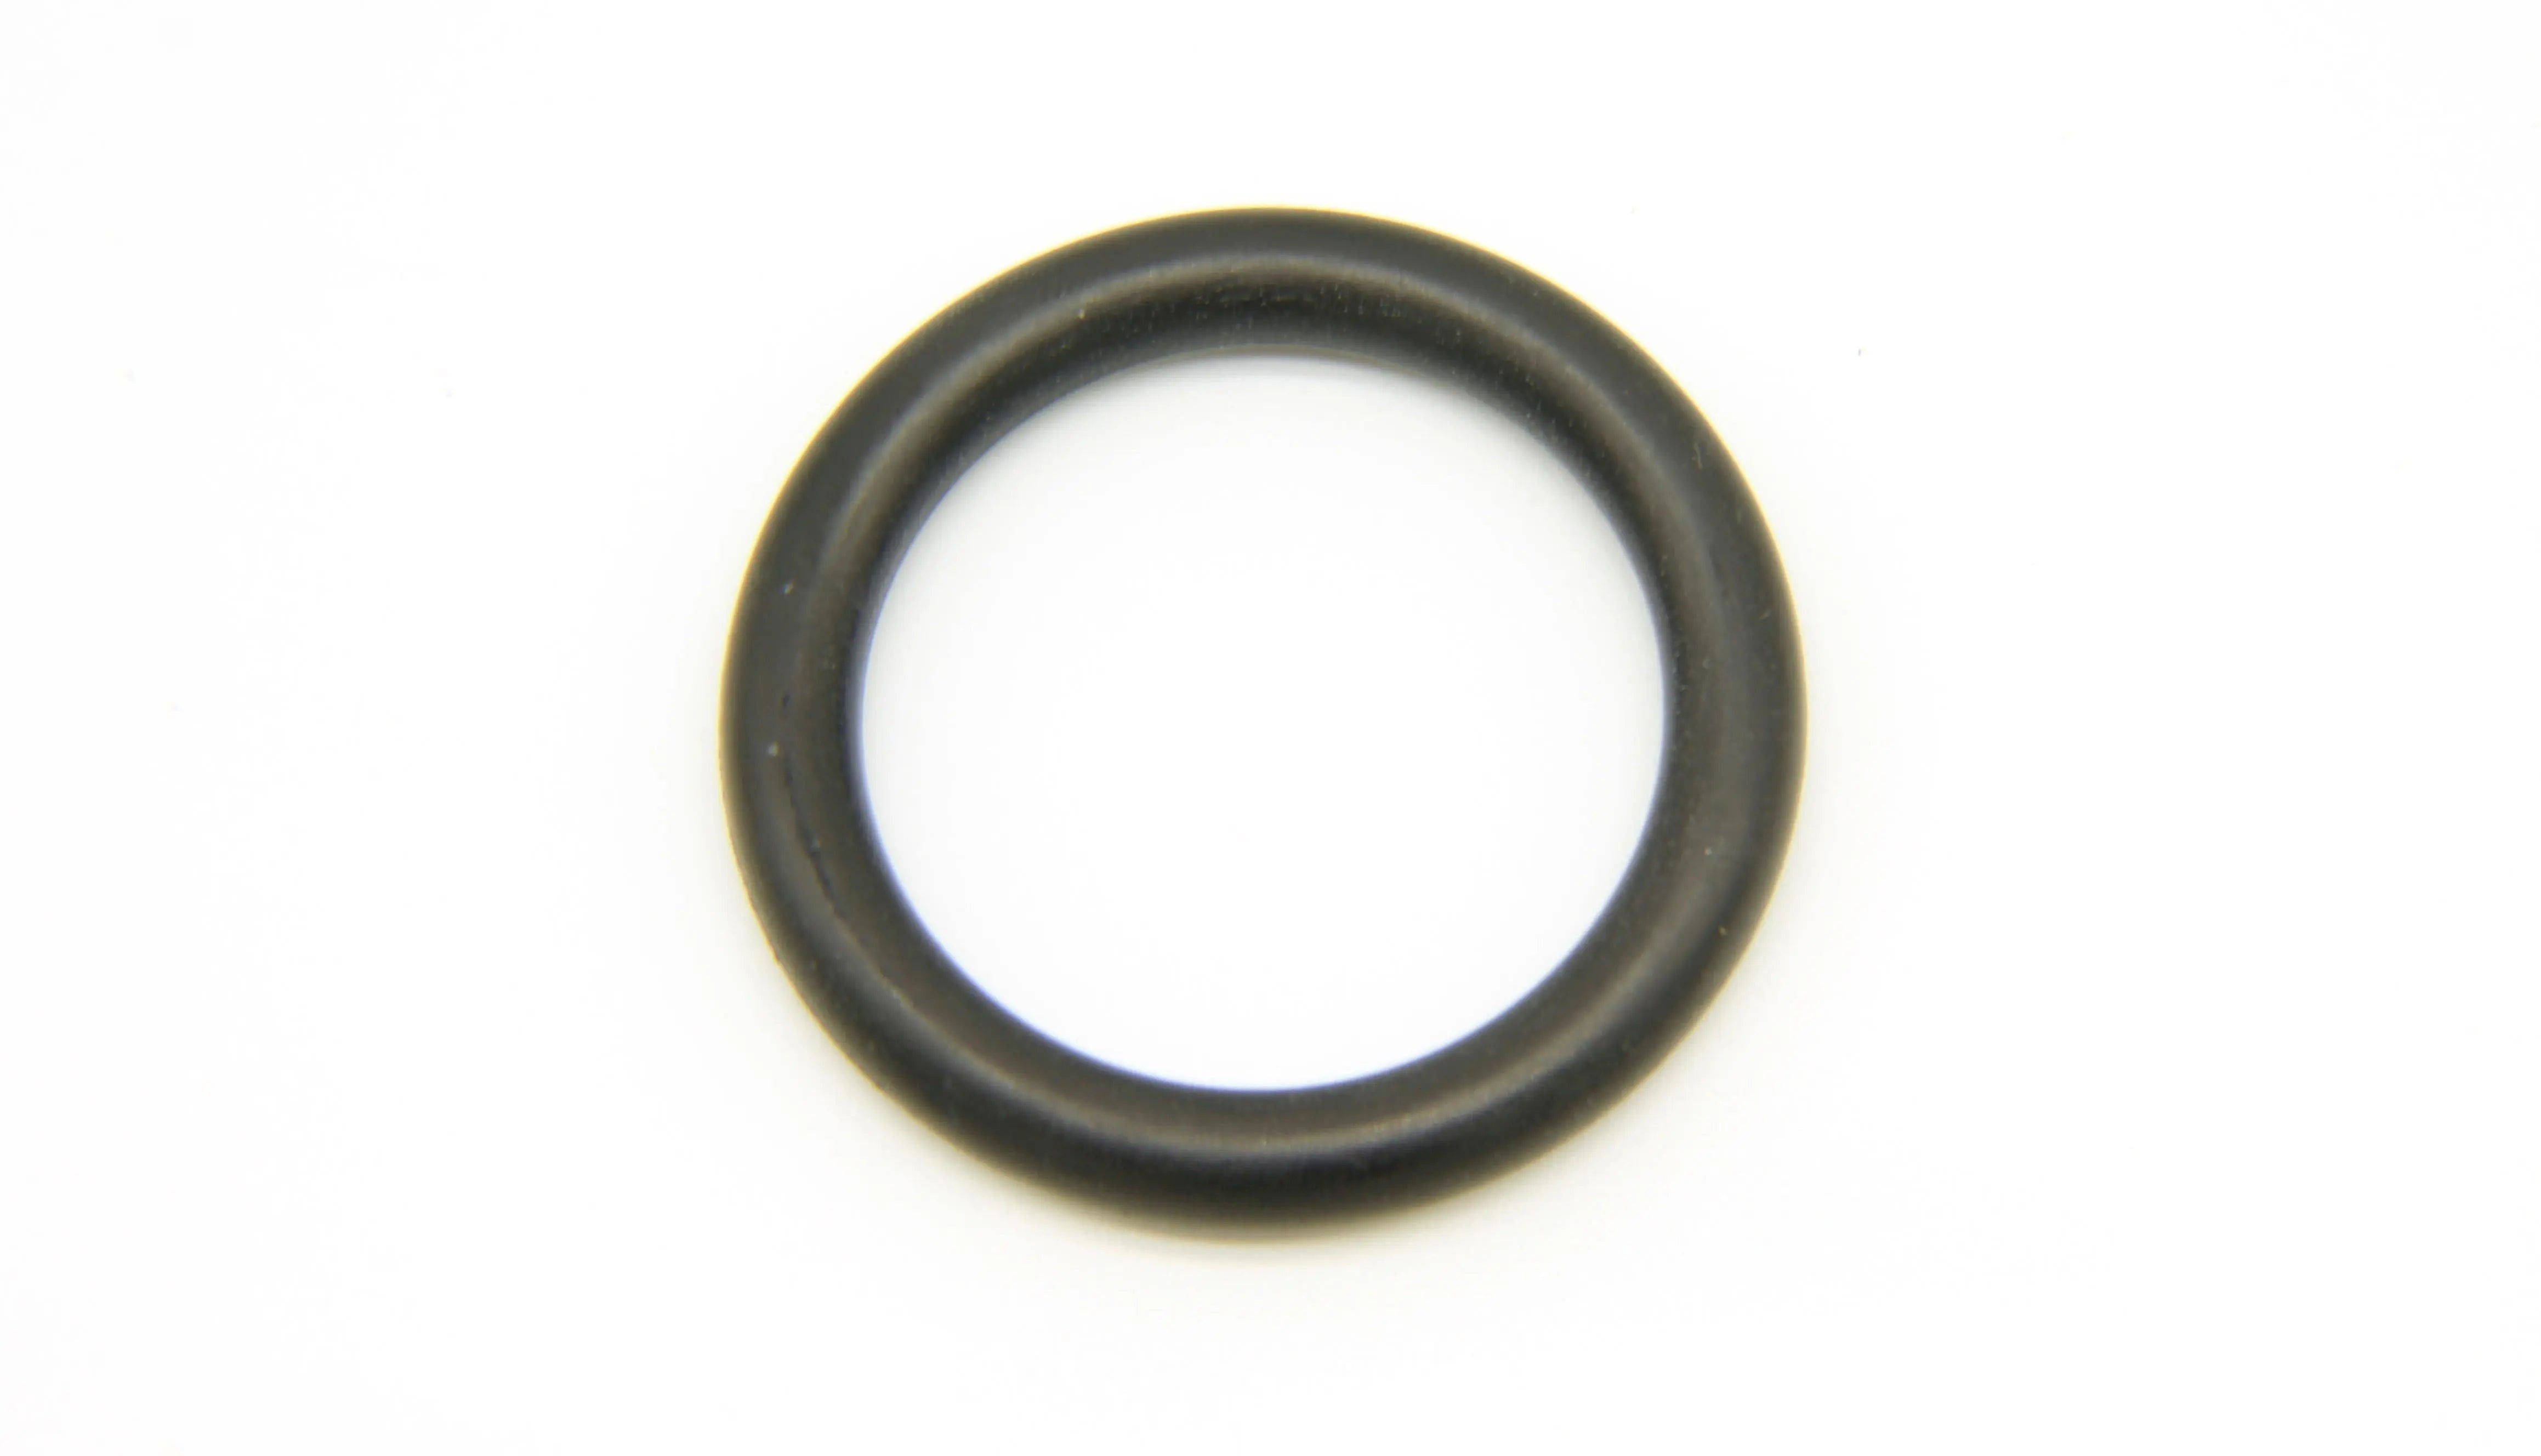 Bobbin winder O-Ring for Gammill Machines